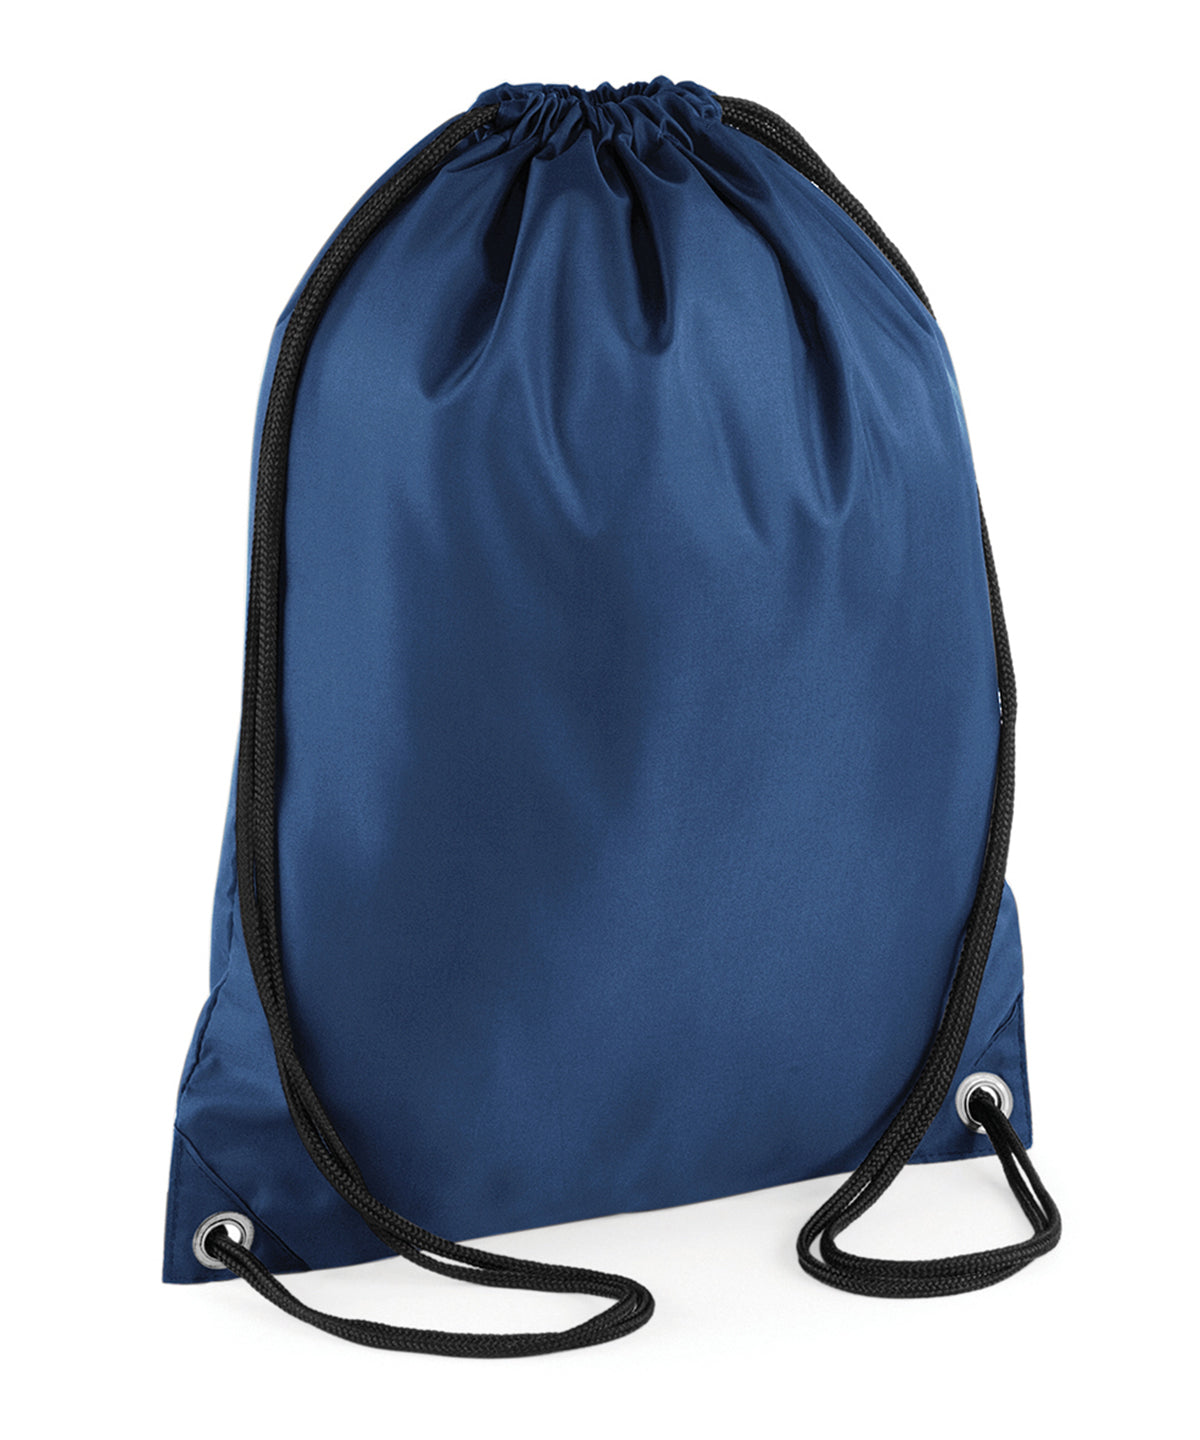 Personalised Bags - Navy Bagbase Budget gymsac